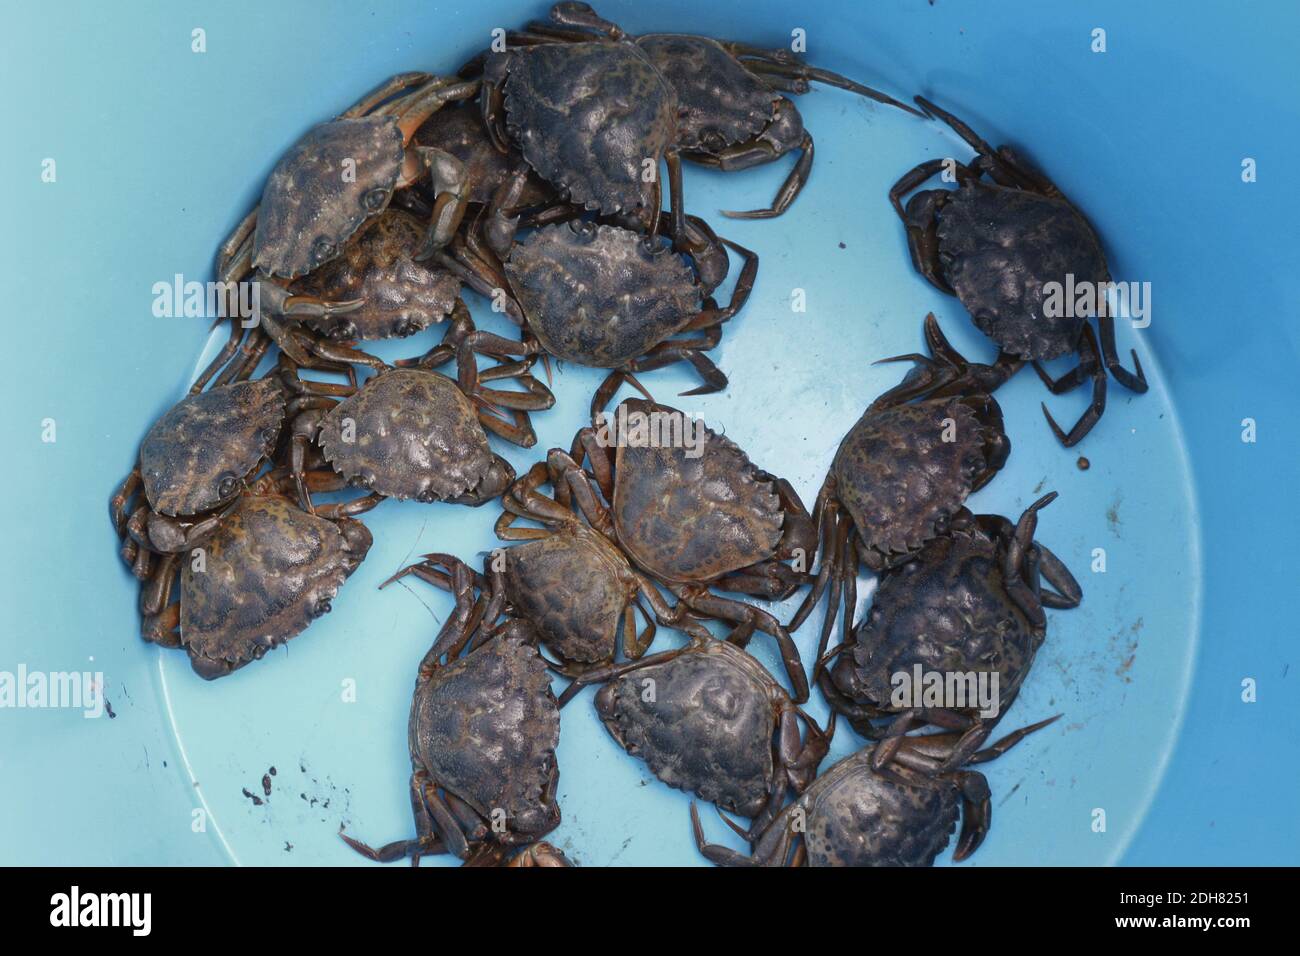 Green Shore Krabbe, Green Krabbe, North Atlantic Shore Krabbe (Carcinus maenas), Krabben auf dem Boden eines Eimers, Deutschland Stockfoto